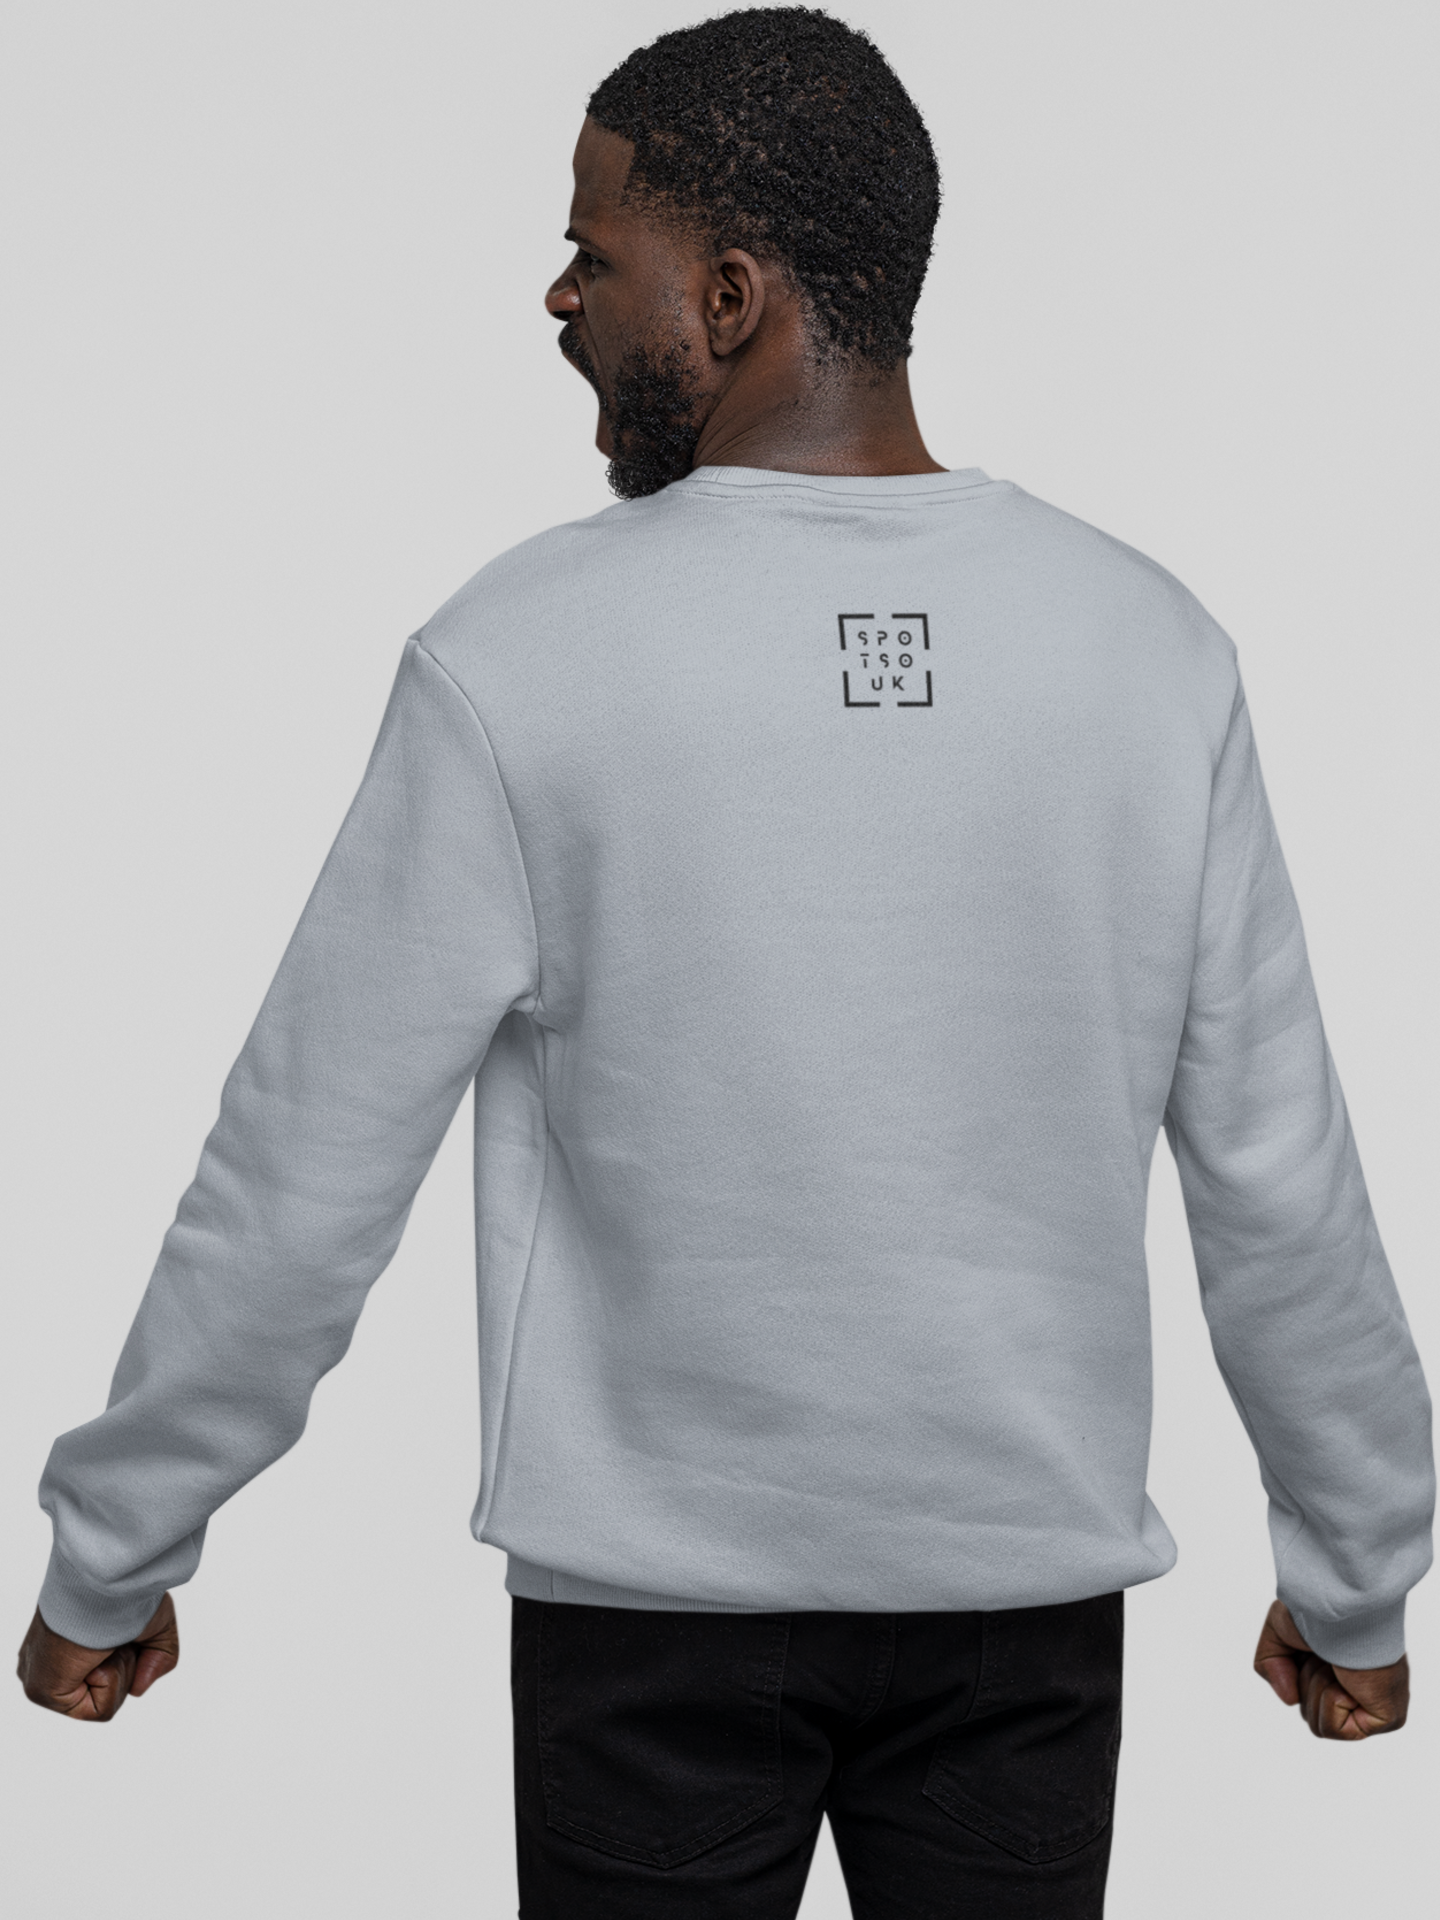 Men's Graphic Crew Neck Sweatshirts